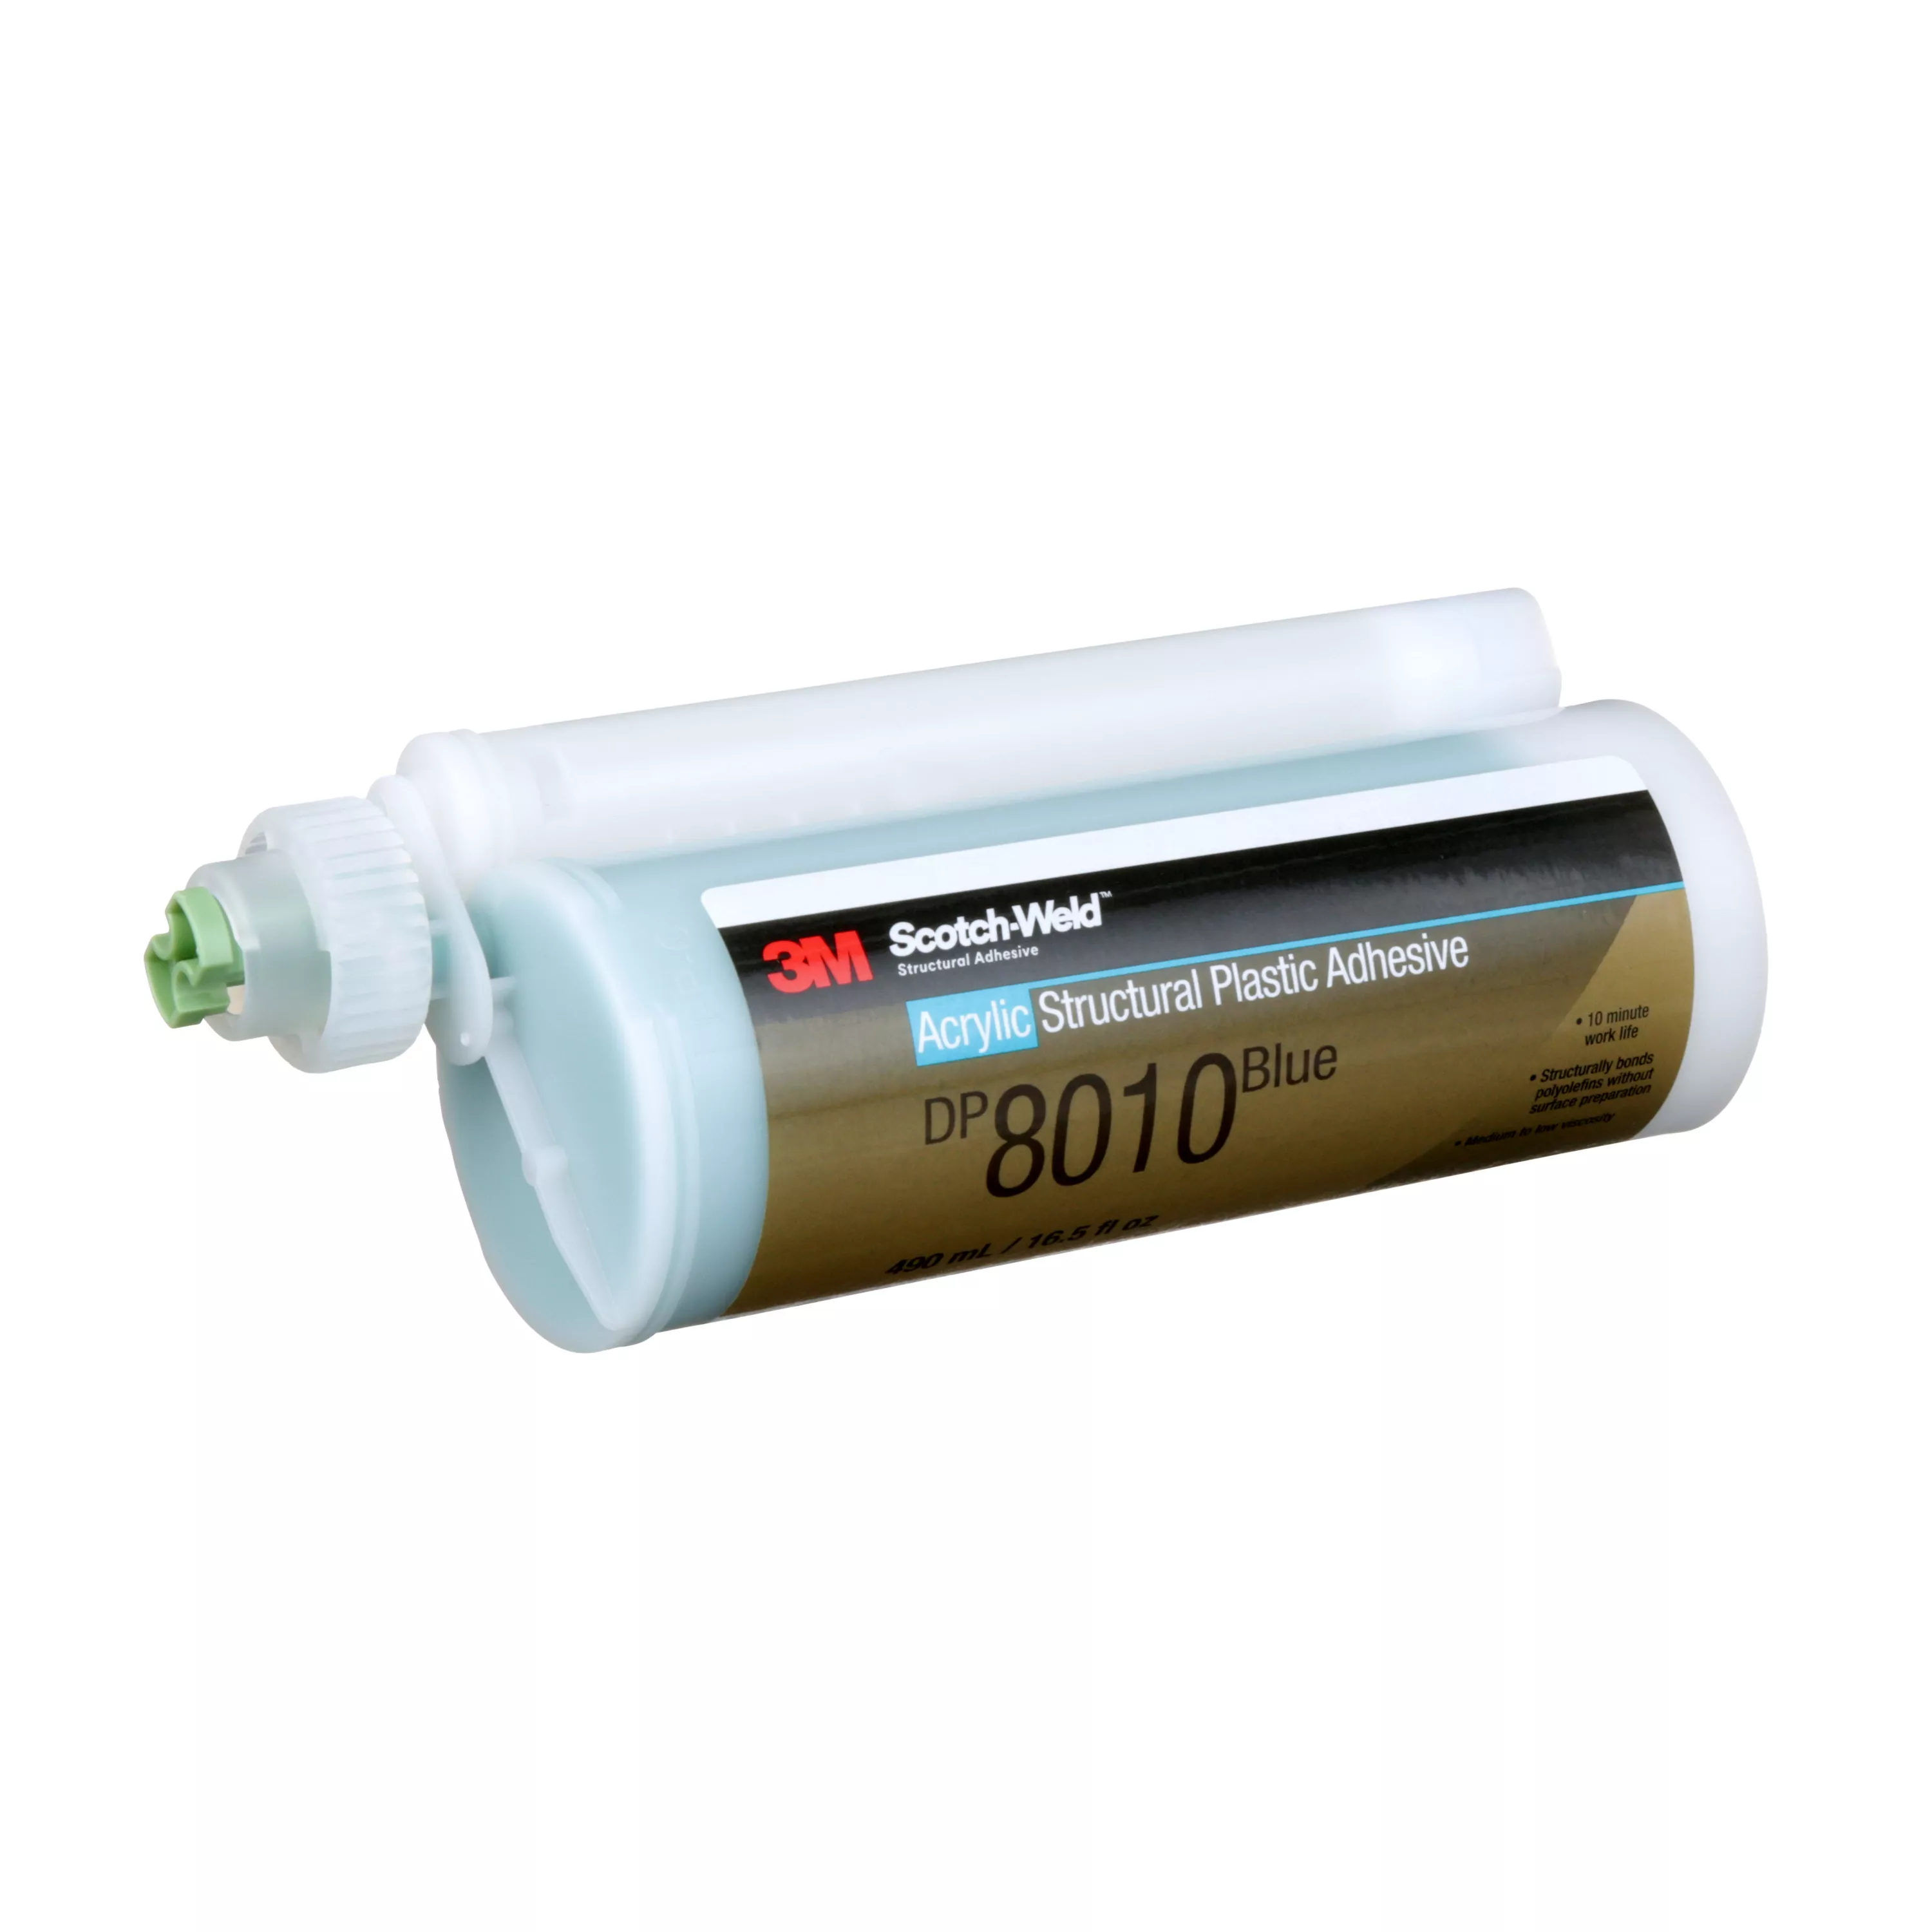 SKU 7100036719 | 3M™ Scotch-Weld™ Structural Plastic Adhesive DP8010